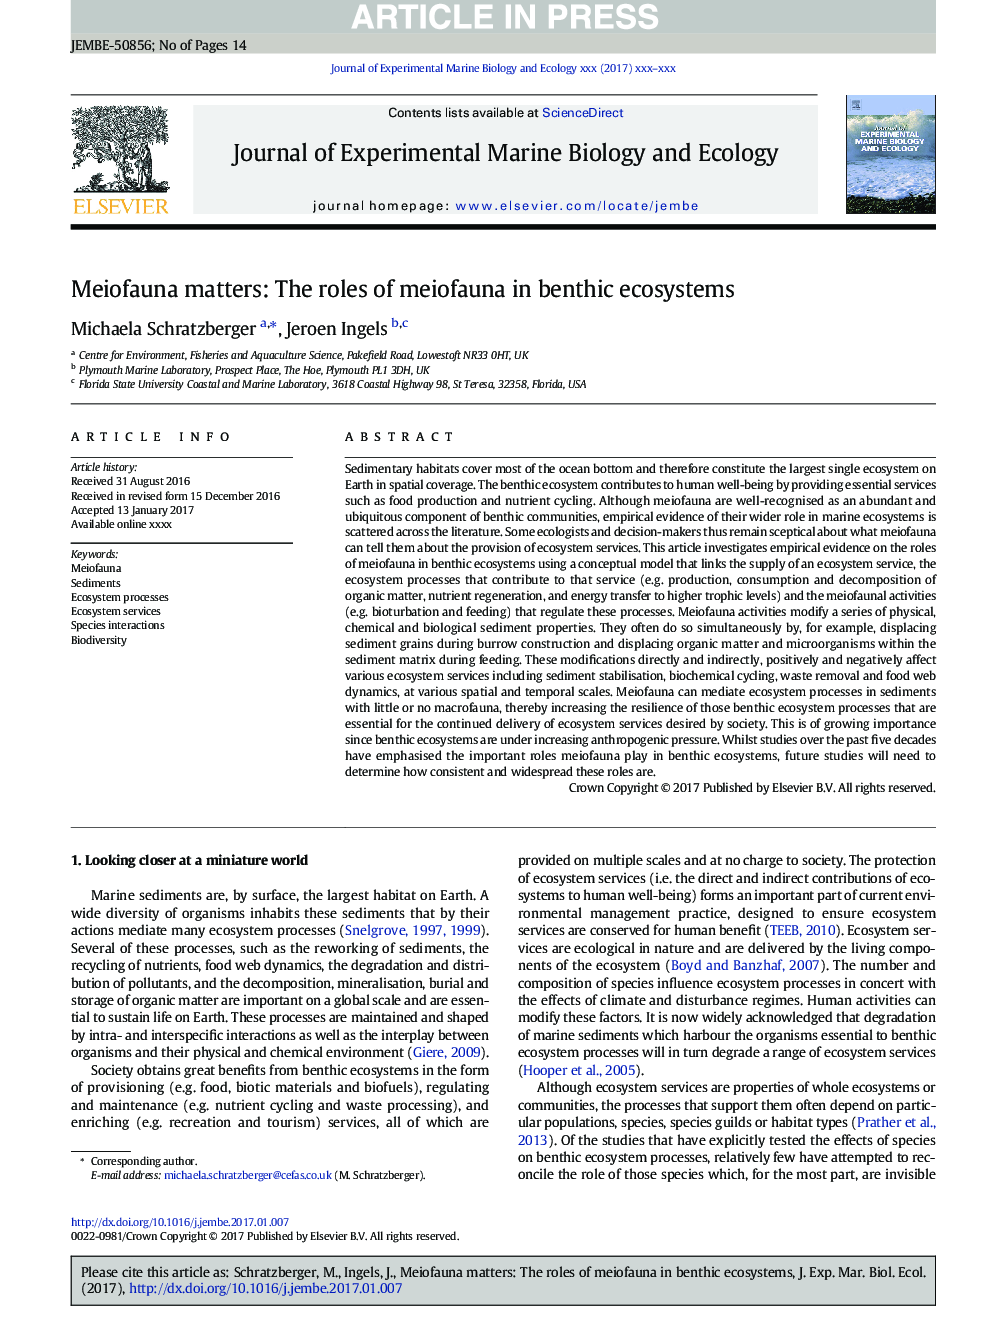 Meiofauna matters: The roles of meiofauna in benthic ecosystems